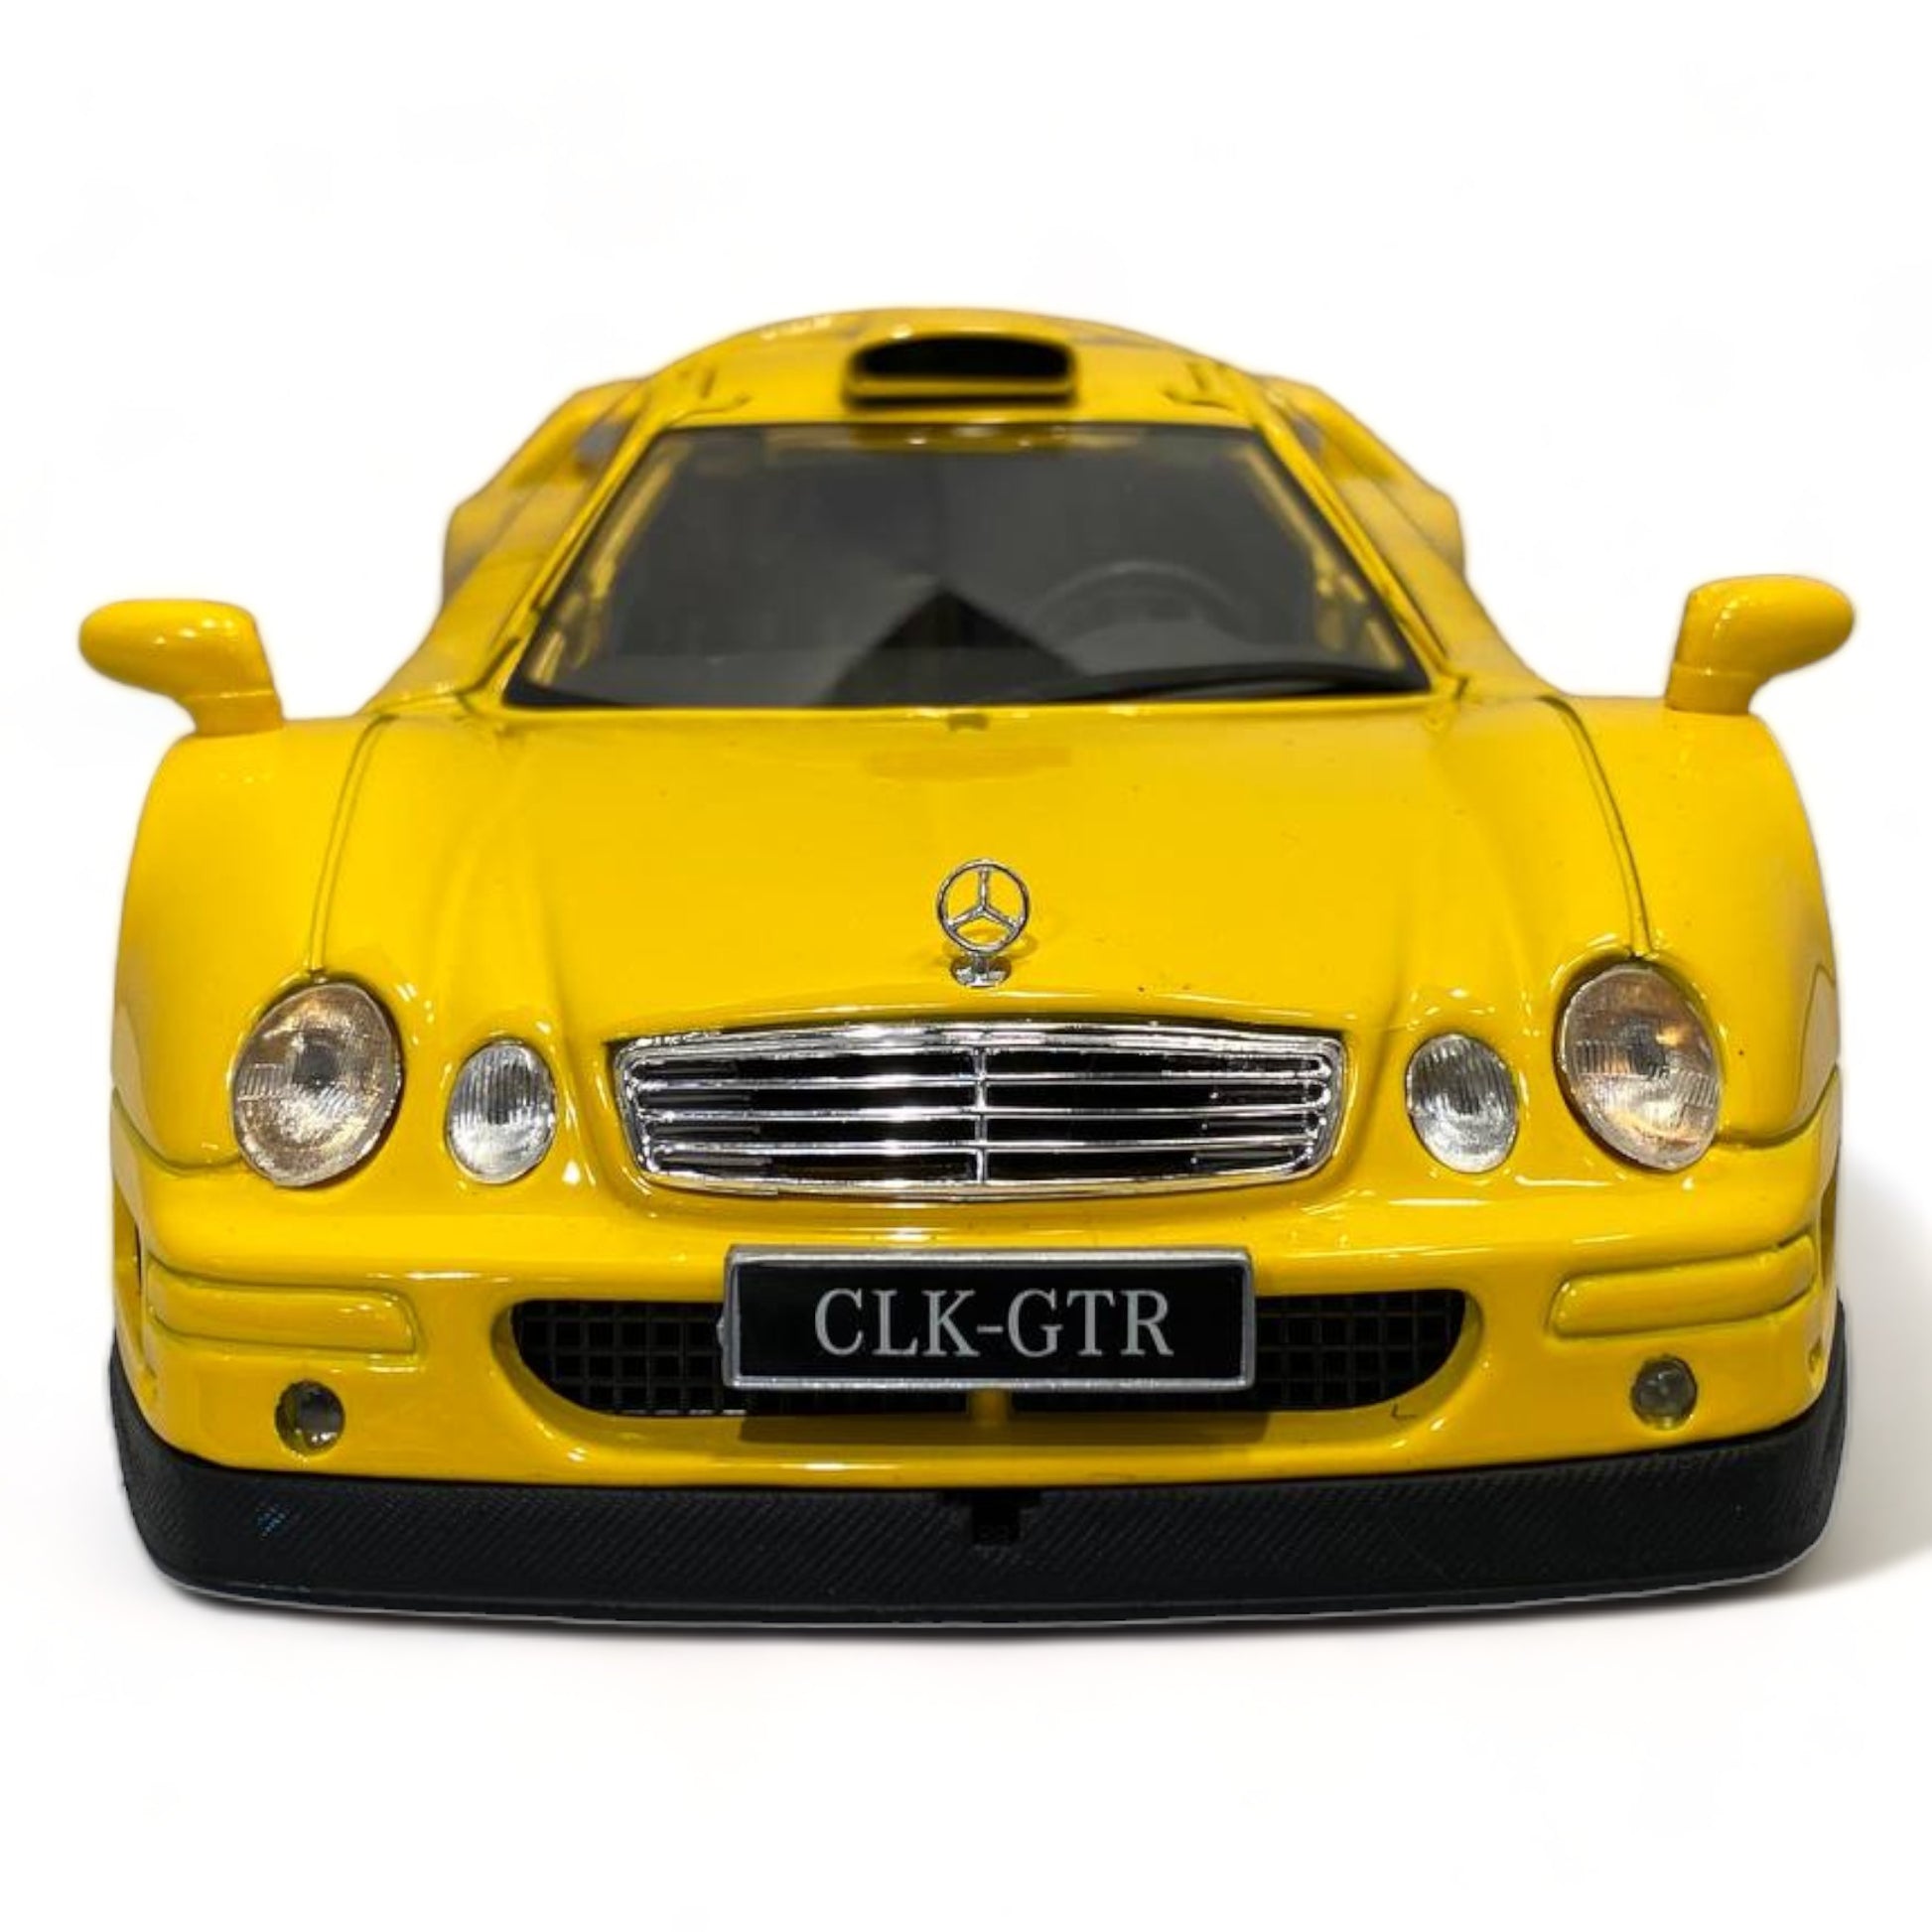 Maisto Mercedes-Benz CLK GTR - (1/18 Full Opening Diecast, Yellow)|Sold in Dturman.com Dubai UAE.